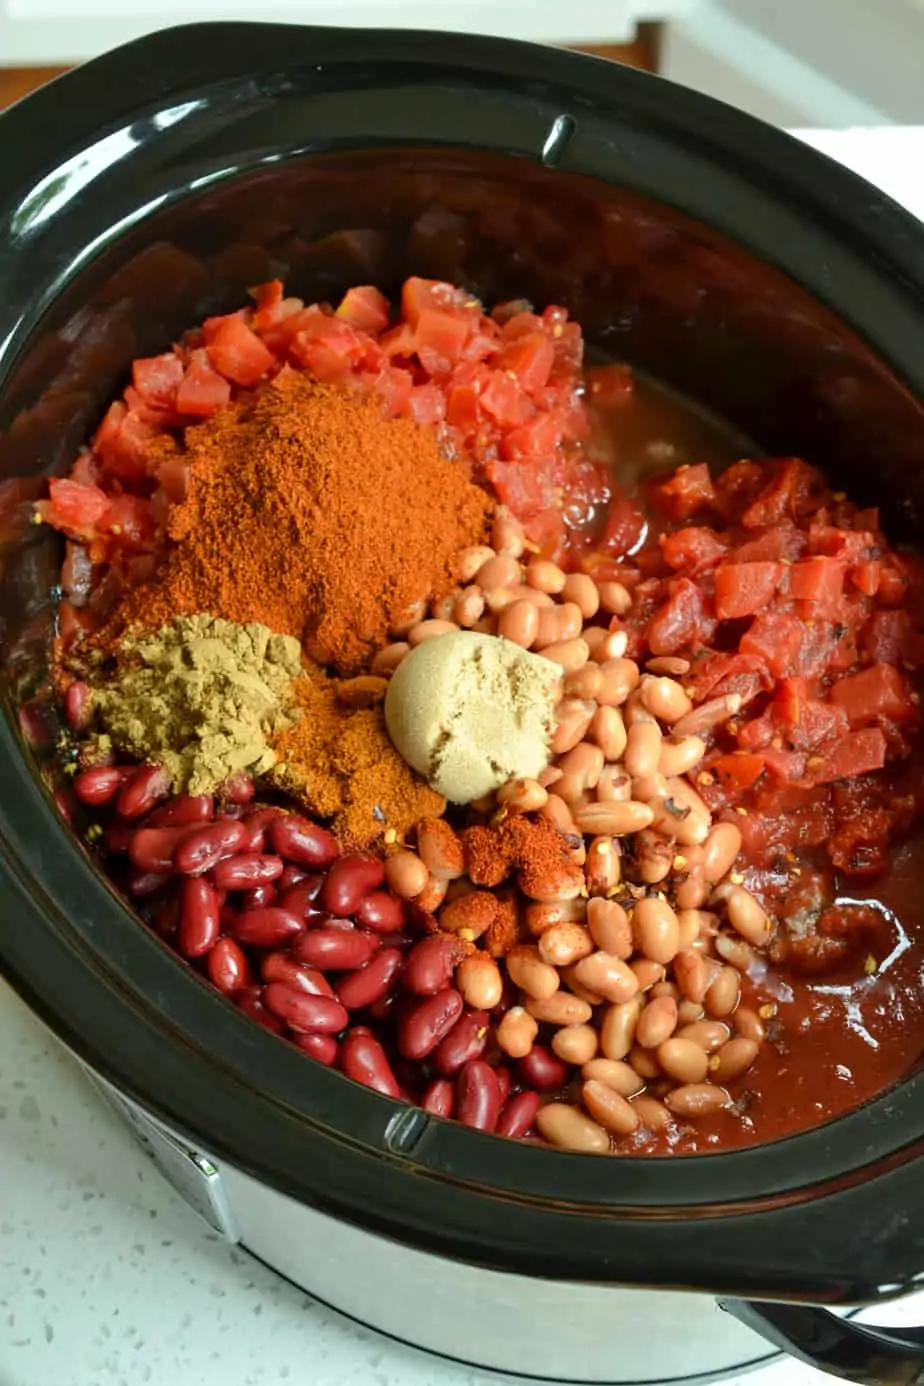 The ingredients to make Crock Pot Chili